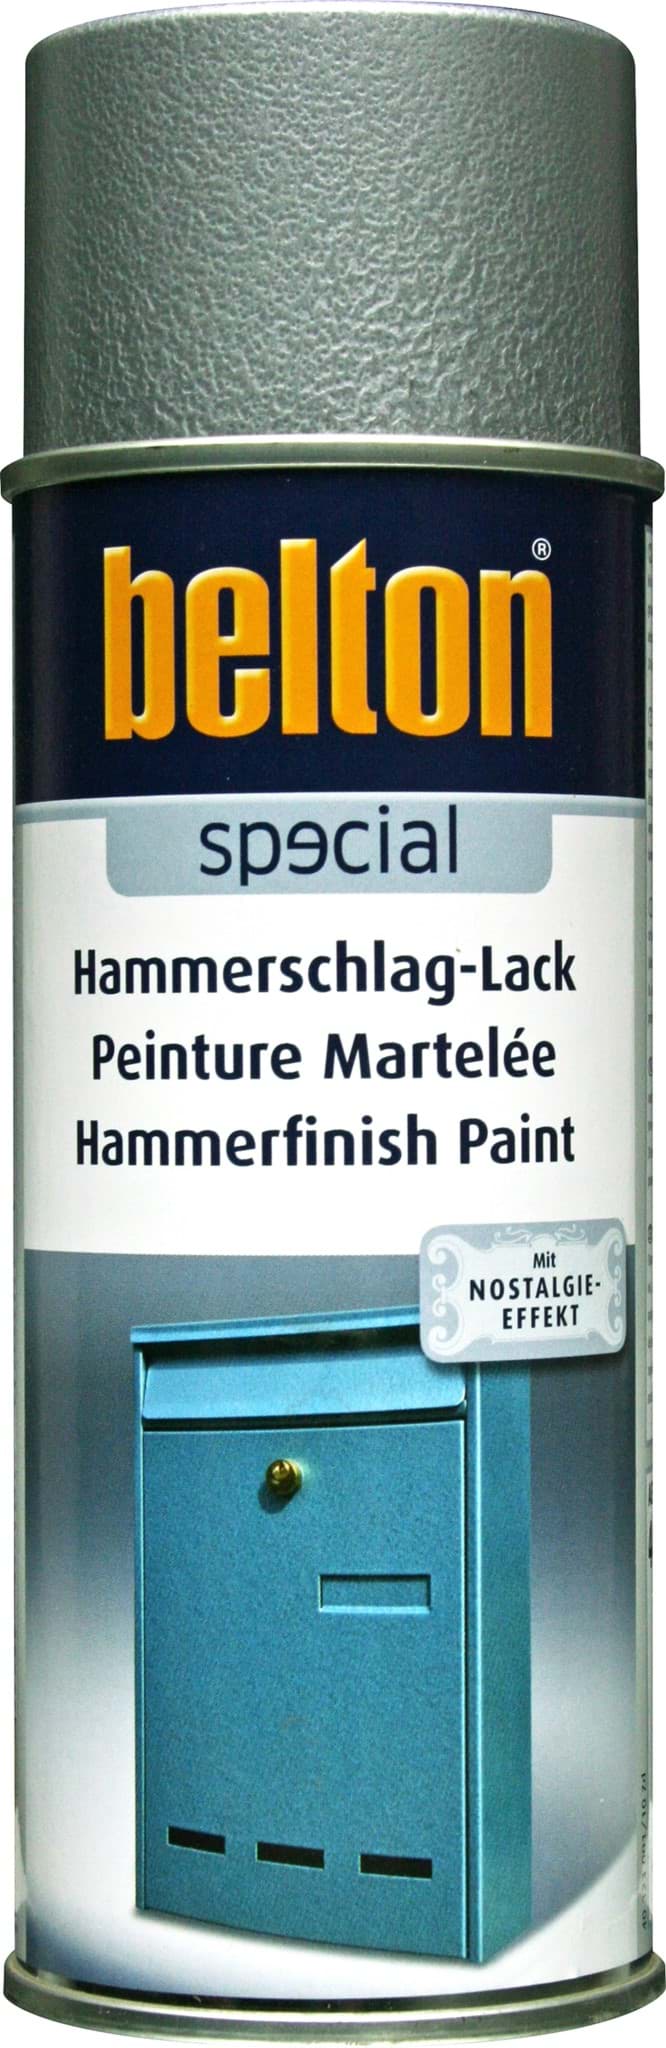 Obraz Belton special Hammerschlag-Lack silber